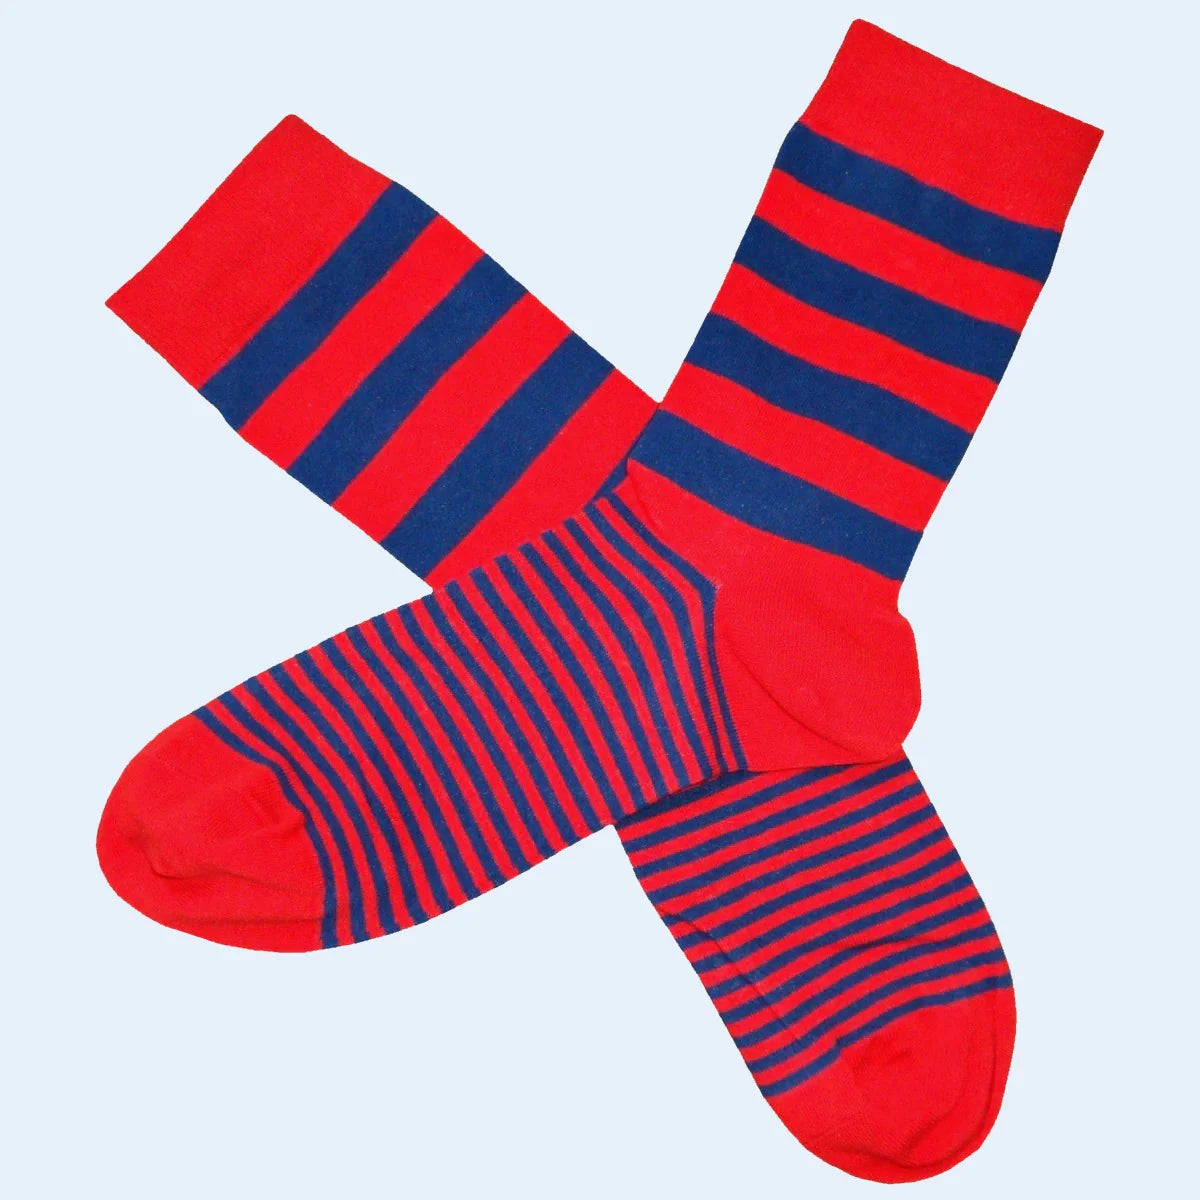 Men's Graded Multi Stripe Socks- Red and Blue